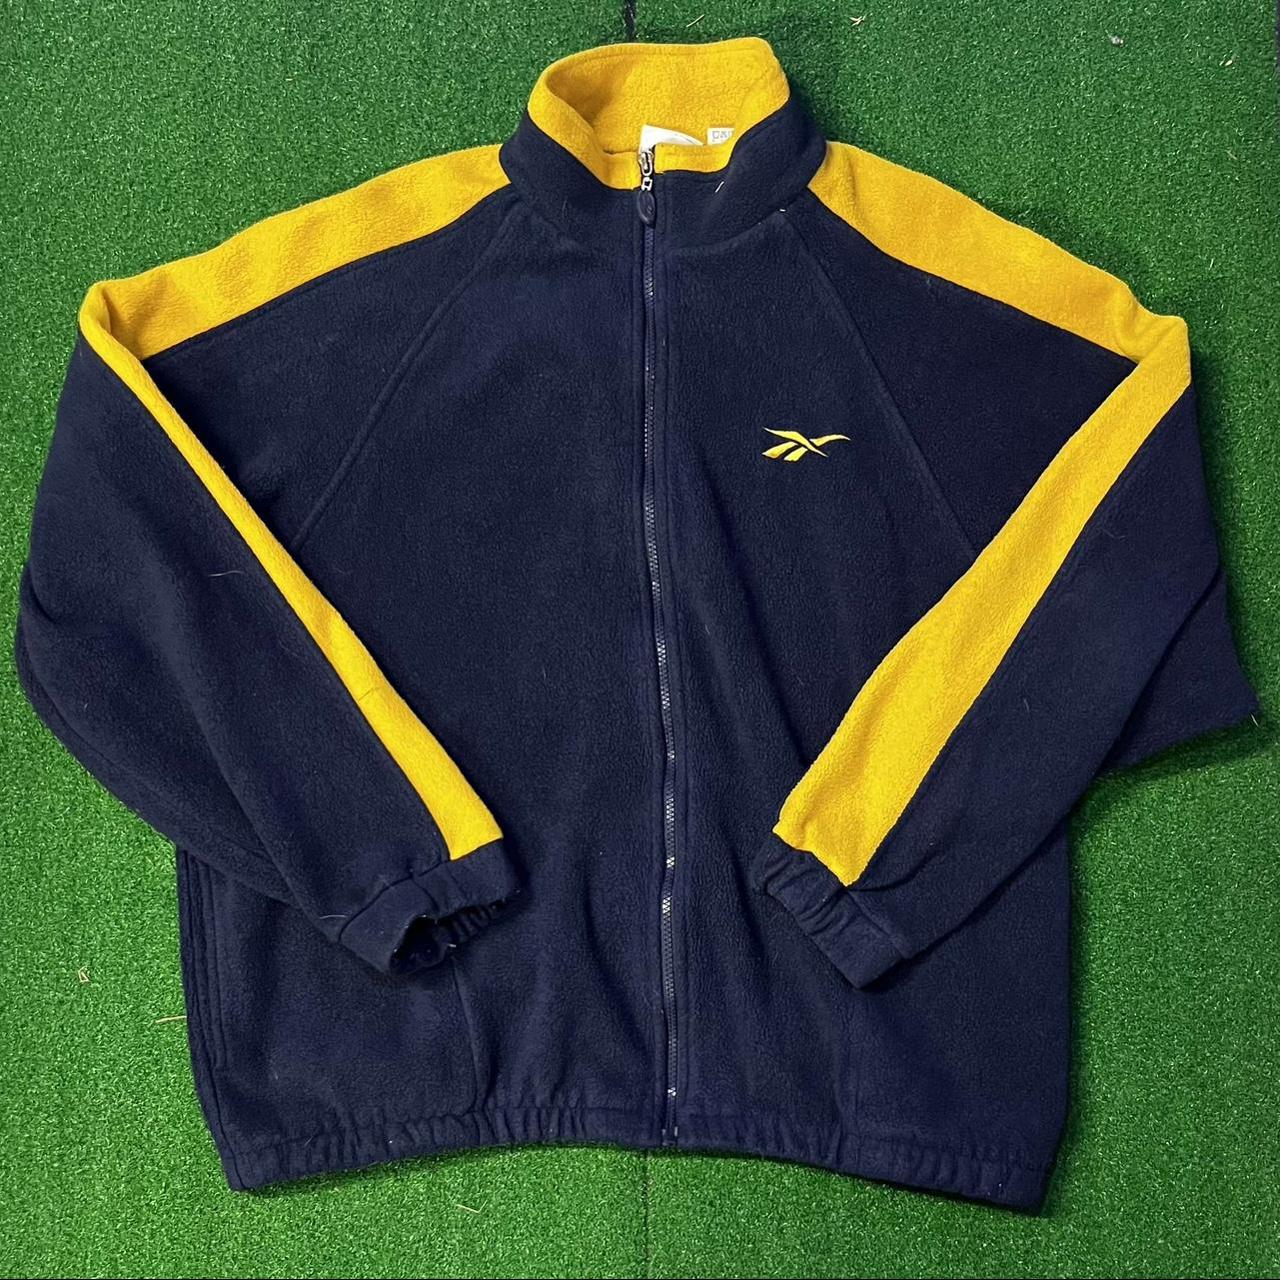 Vintage 90s Reebok zip up jacket Size... - Depop